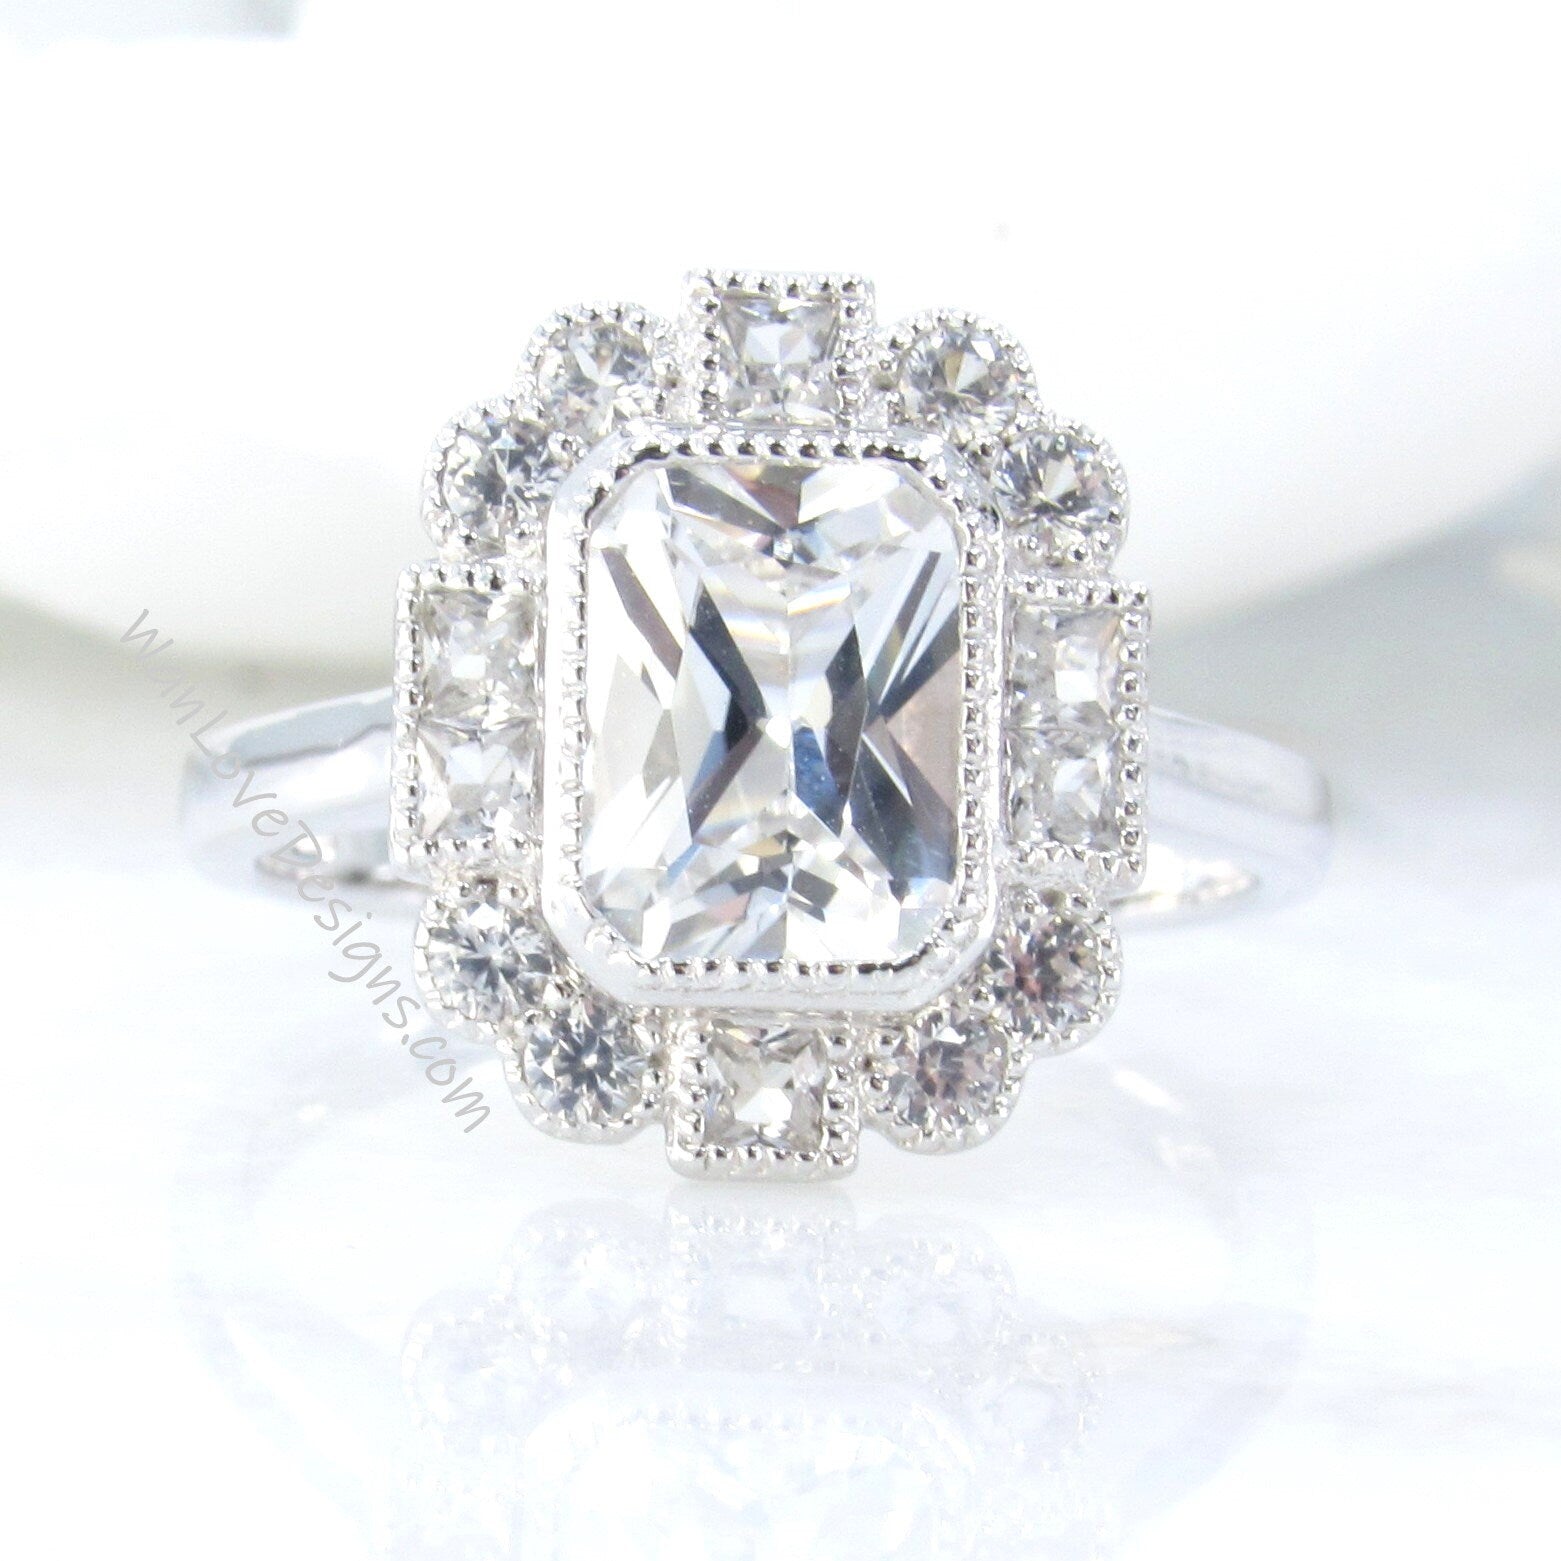 White Gold Emerald Cut White Sapphire Ring, Princess Round Cut Bezel Halo, Plain Smooth Band, Bezel Setting Center Gemstone, Ready to Ship